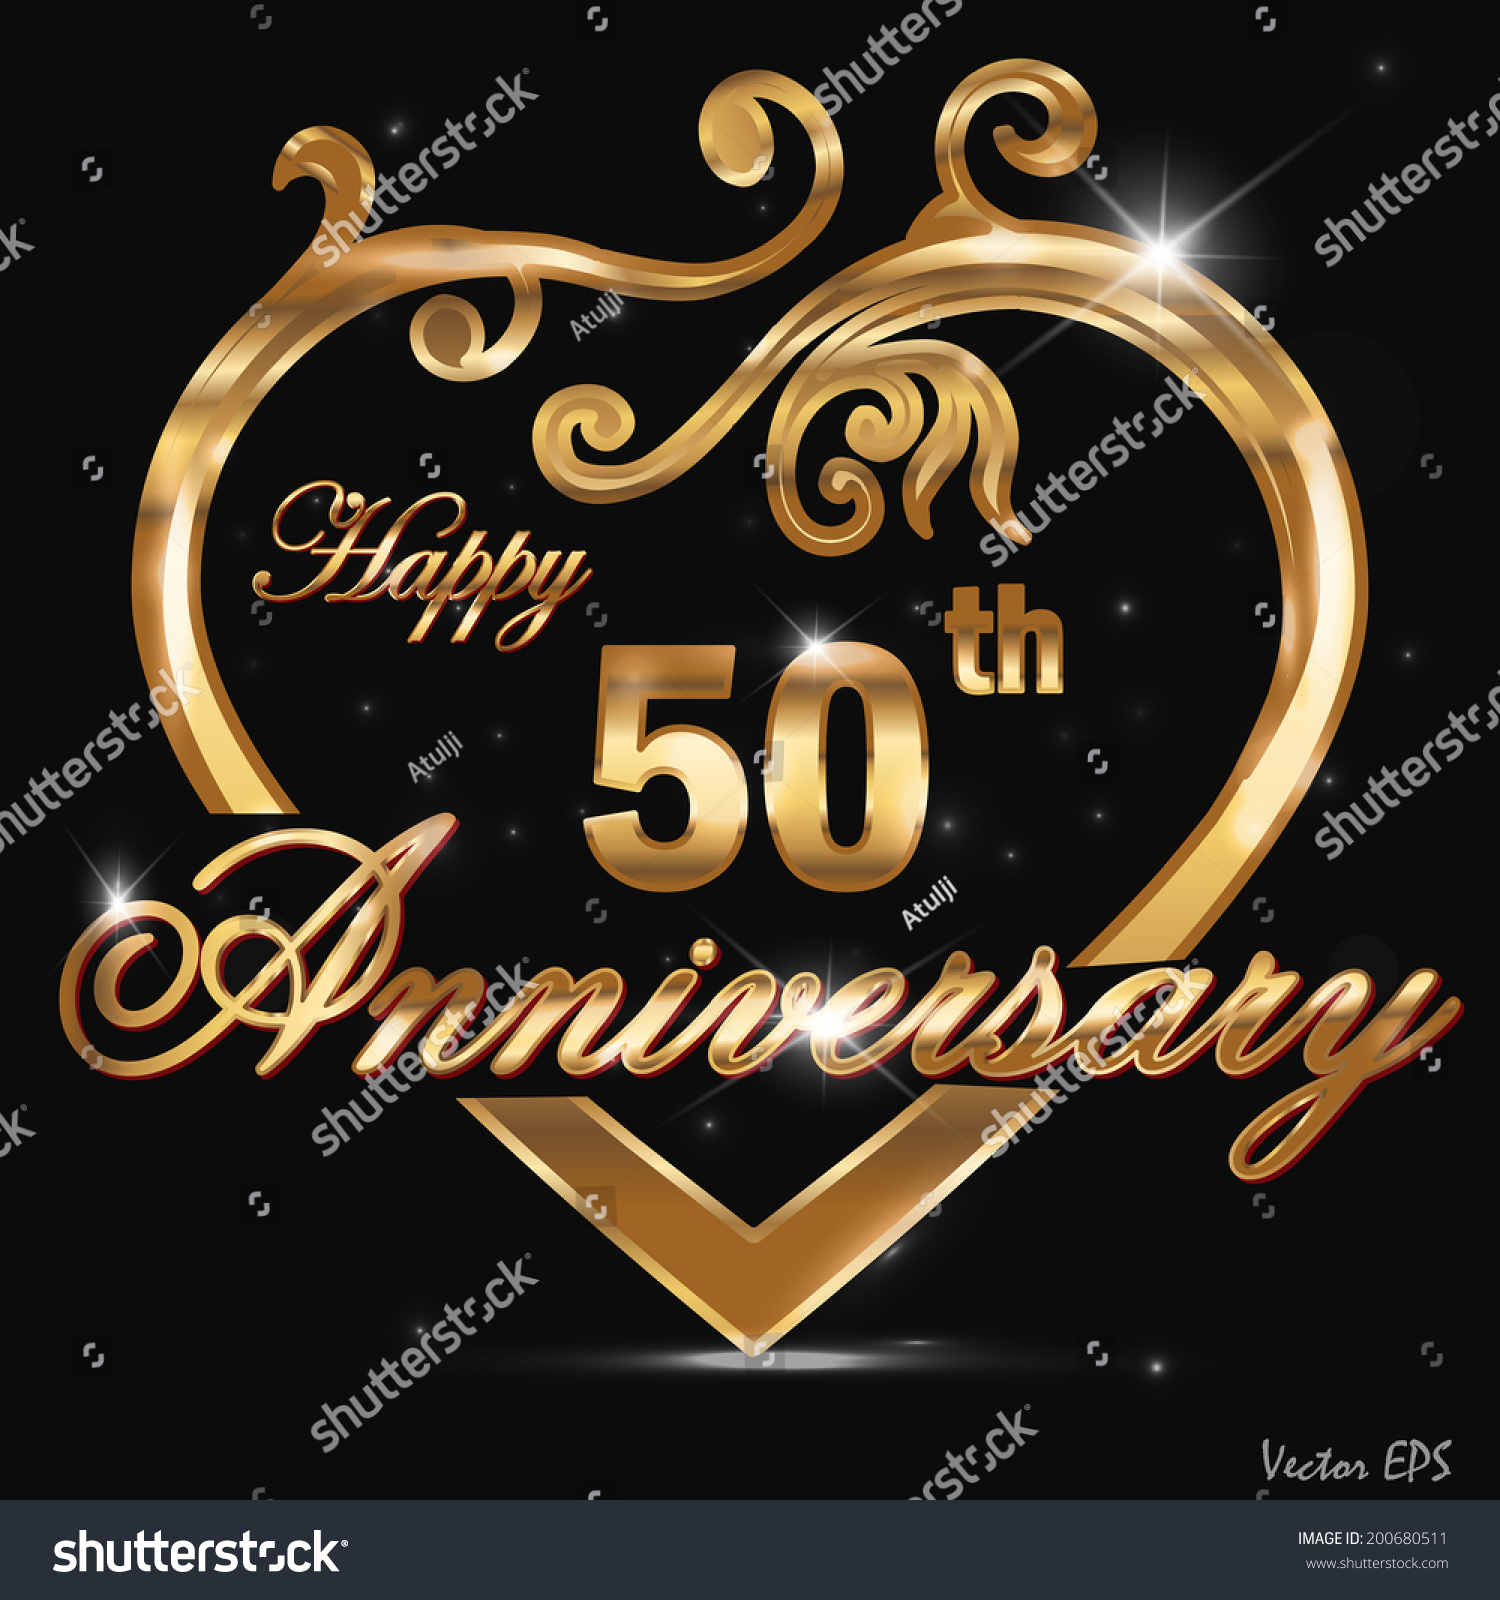 SVG of 50 year anniversary golden heart, 50th anniversary decorative golden heart design - vector eps10 svg